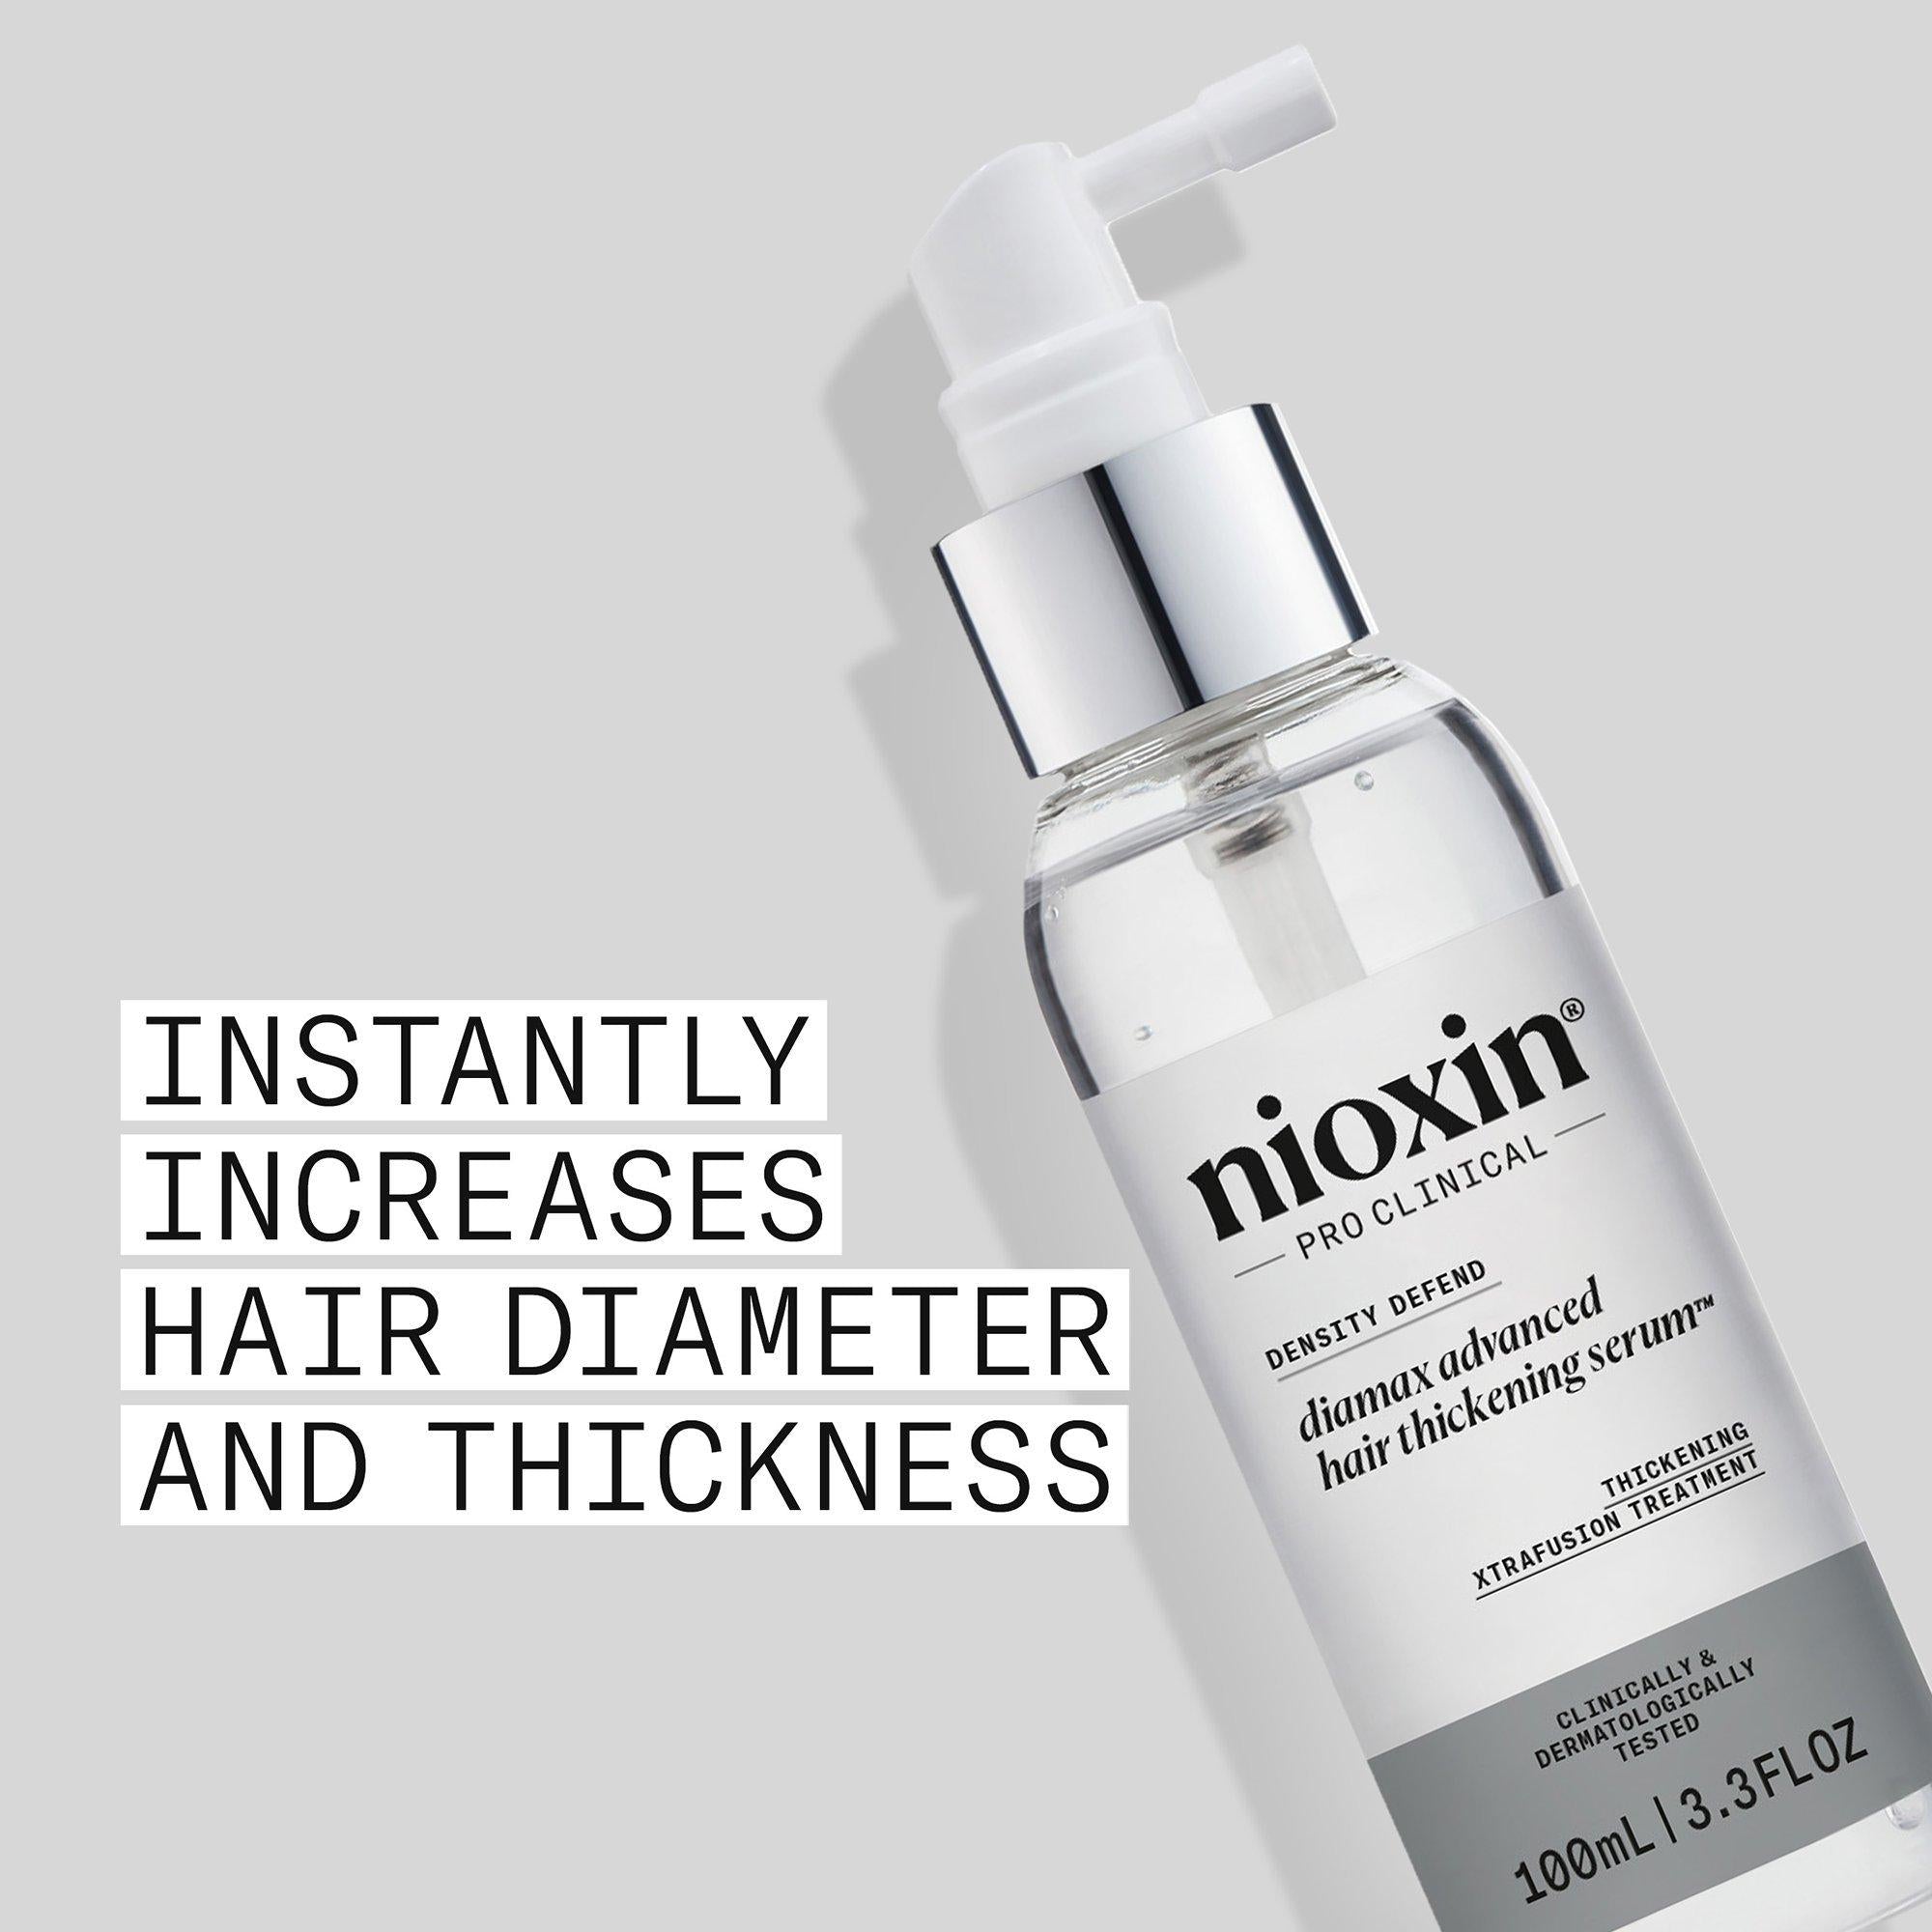 Nioxin Density Defend Diamax Advanced Hair Thickening Serum / 3.3OZ